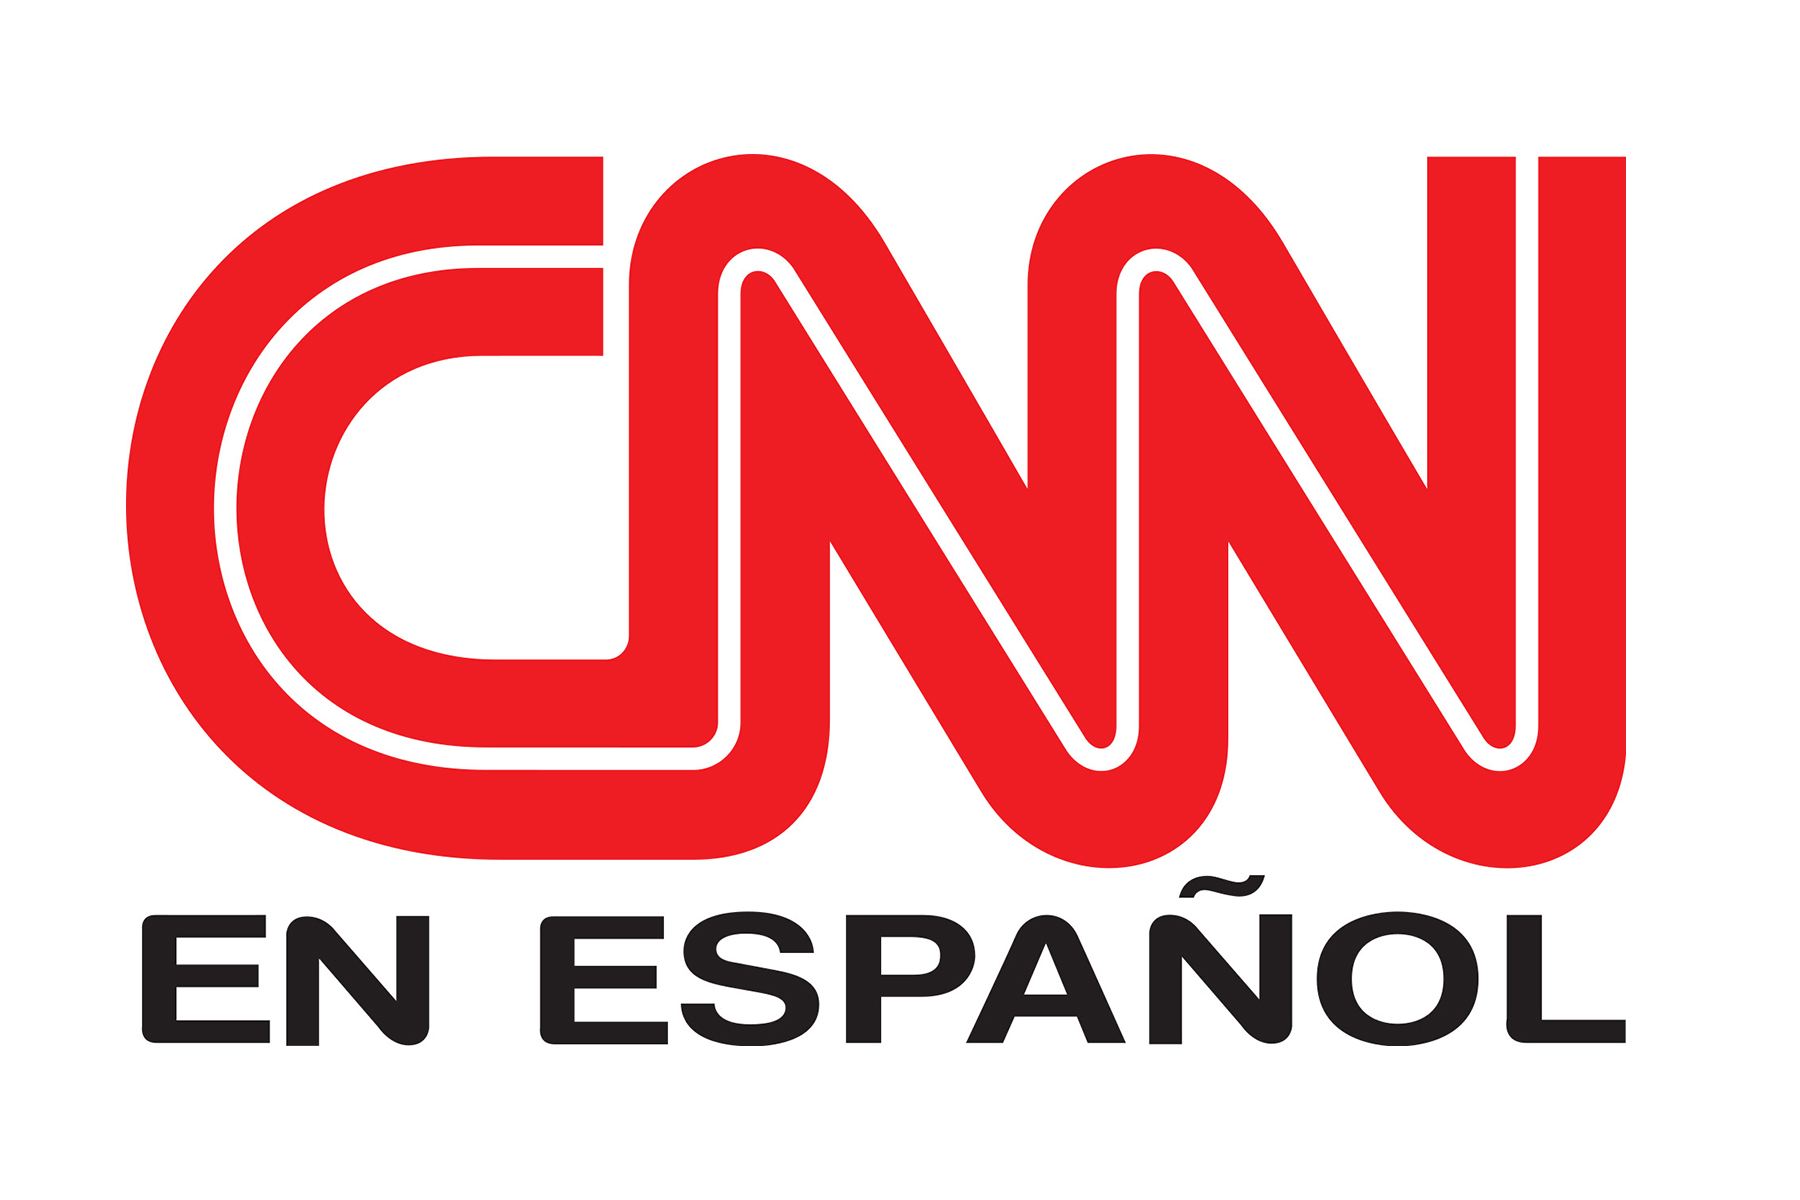 CNN en Español is leaving Atlanta for Mexico City